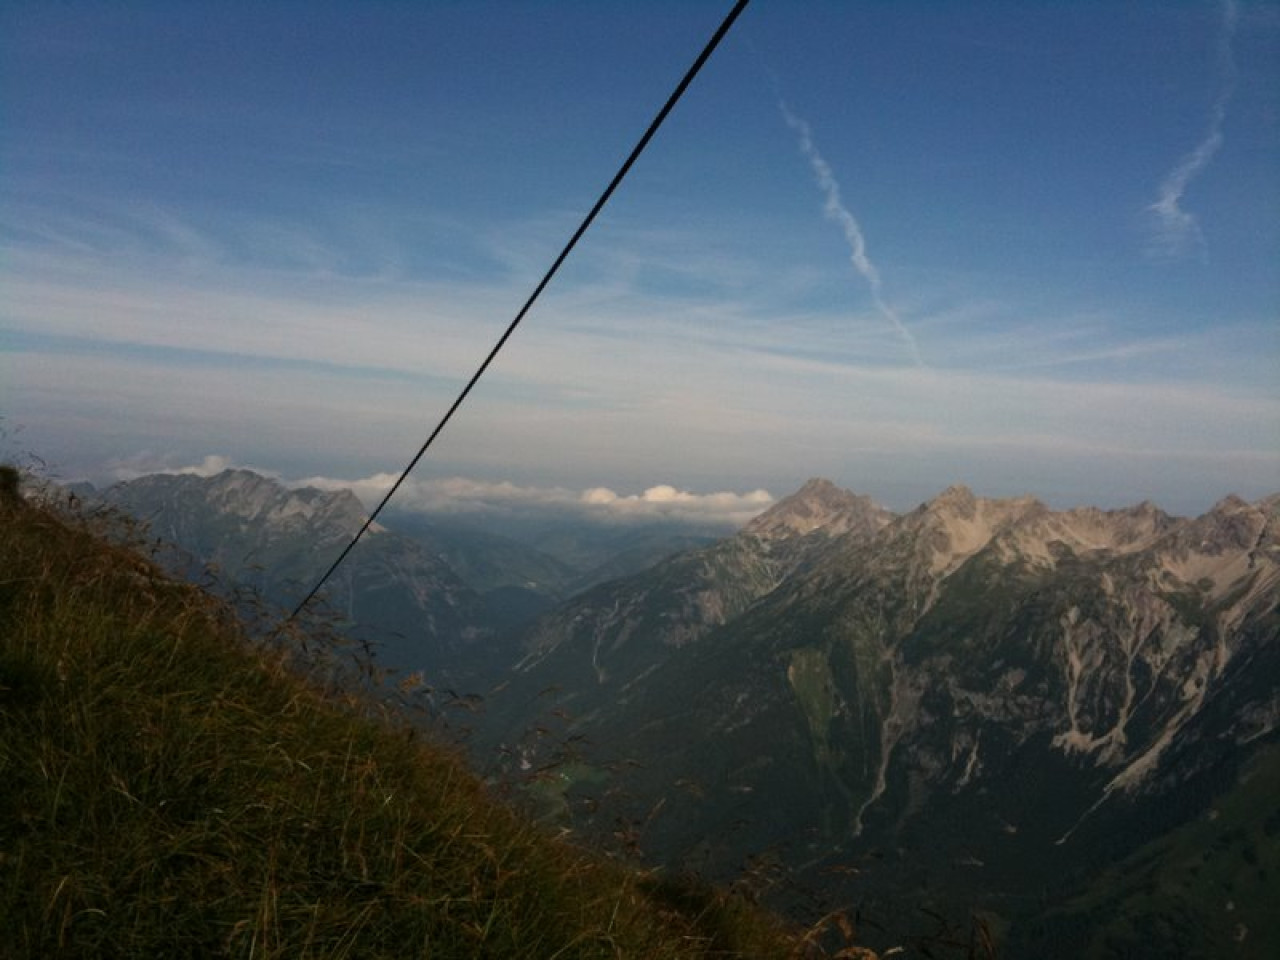  Peischelgruppe - Allgäuer Alpen